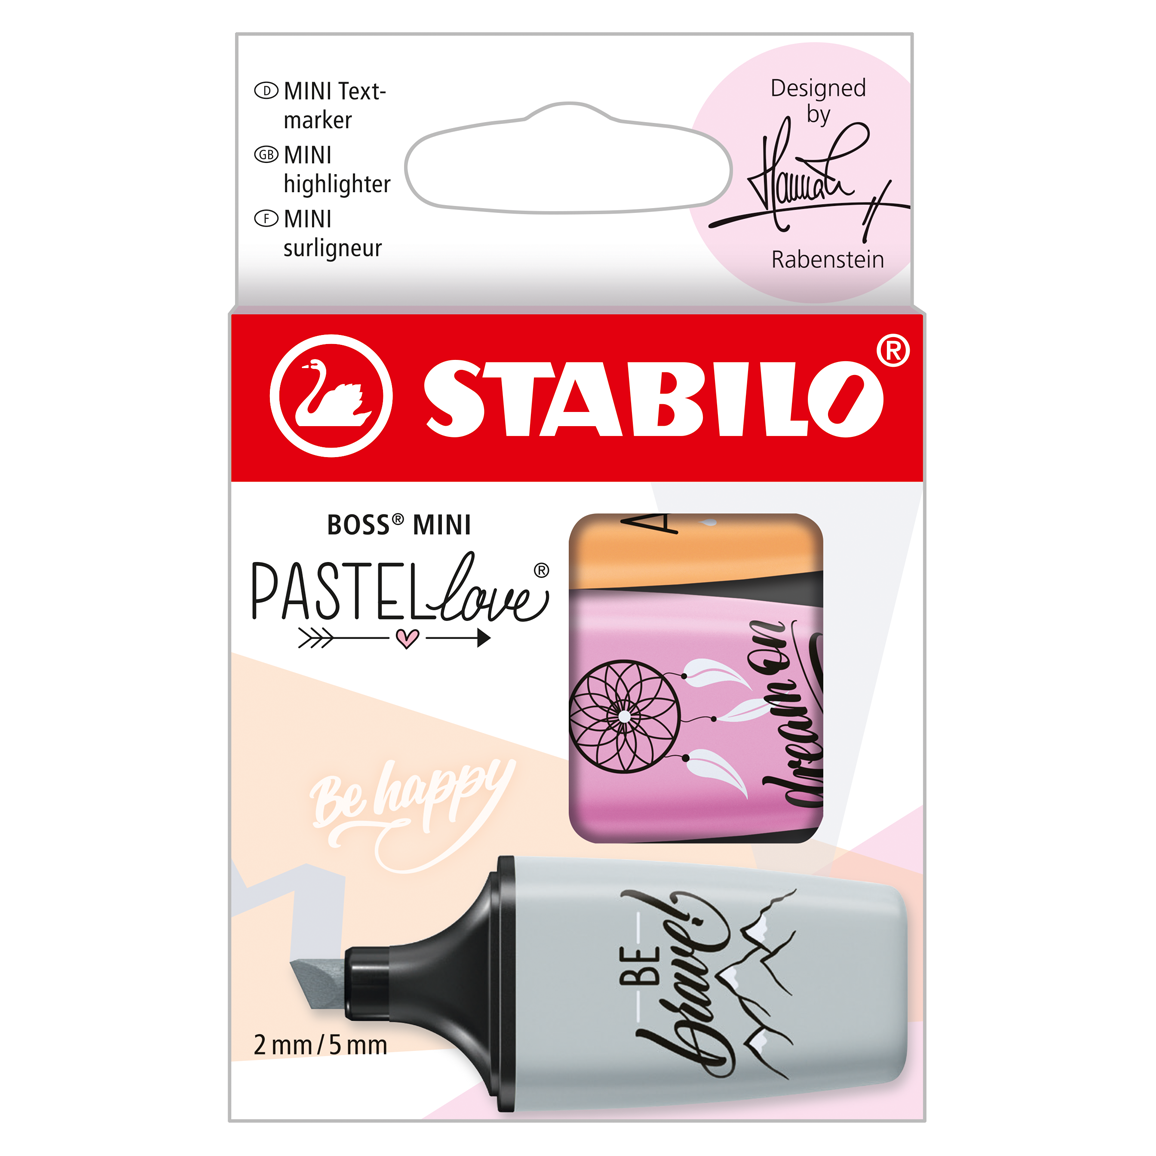 STABILO BOSS MINI Pastellove x3 - Set #1 - Quo Vadis